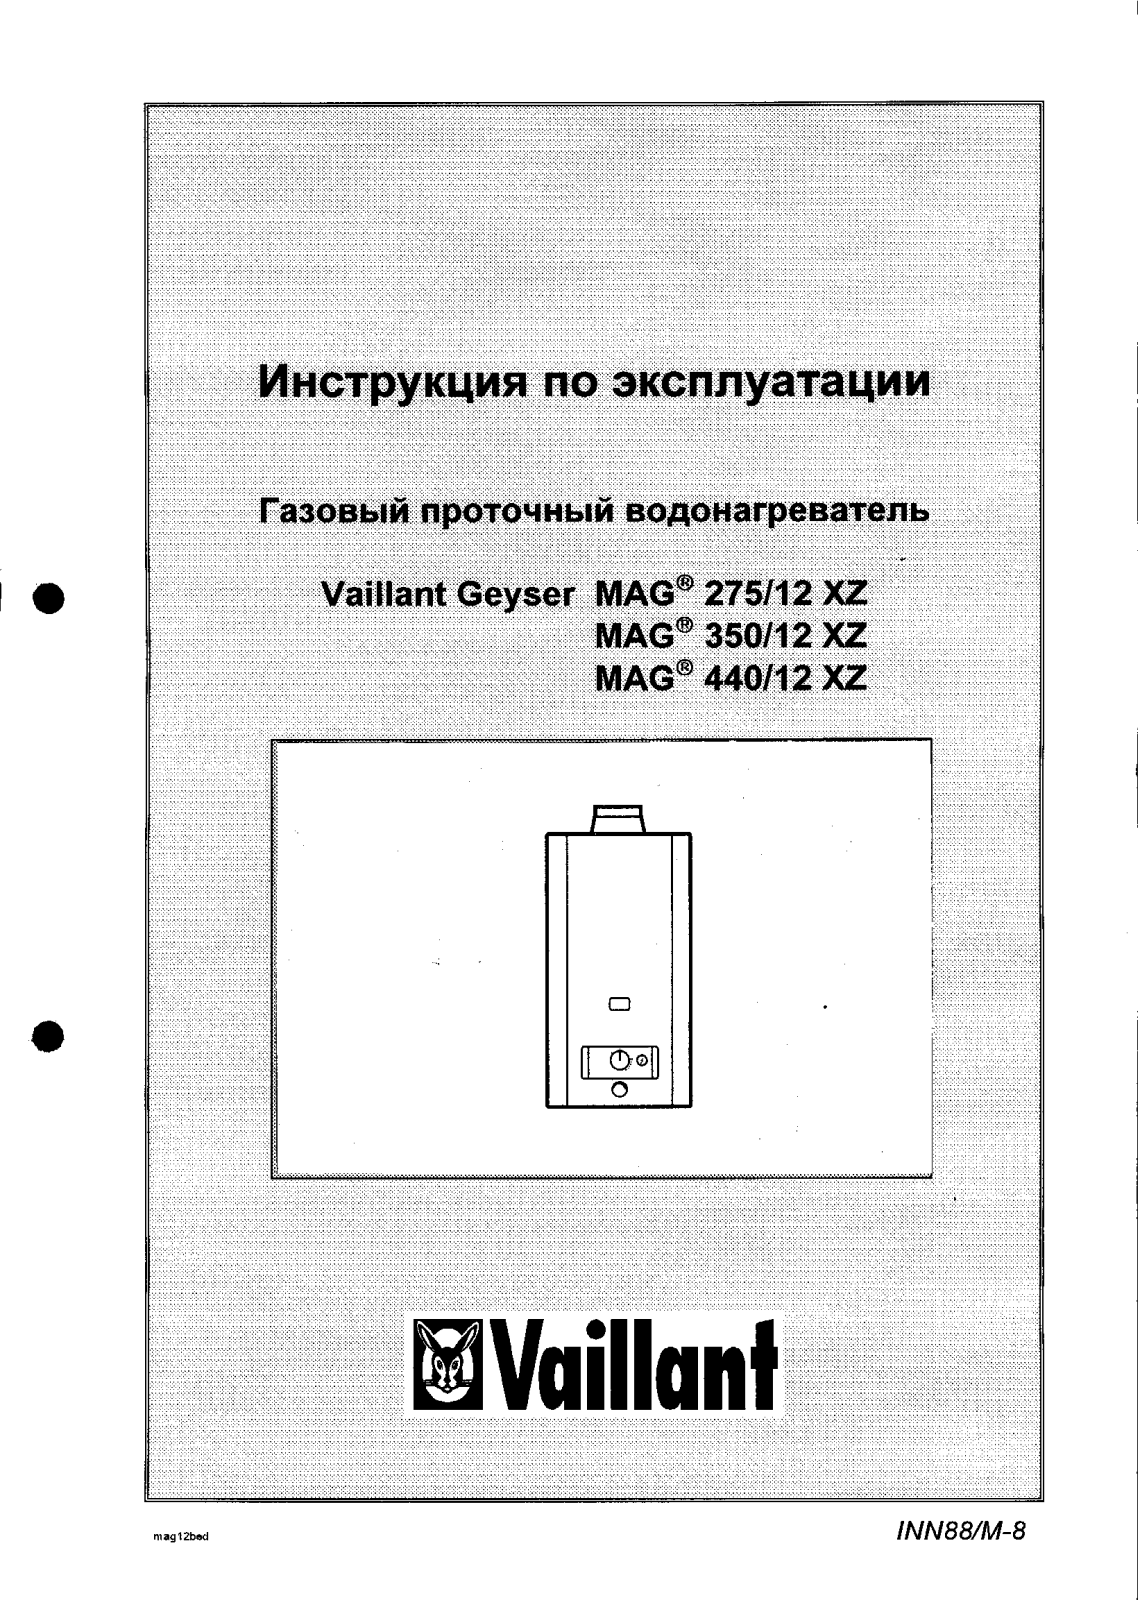 Vaillant MAG 440-12 XZ User Manual